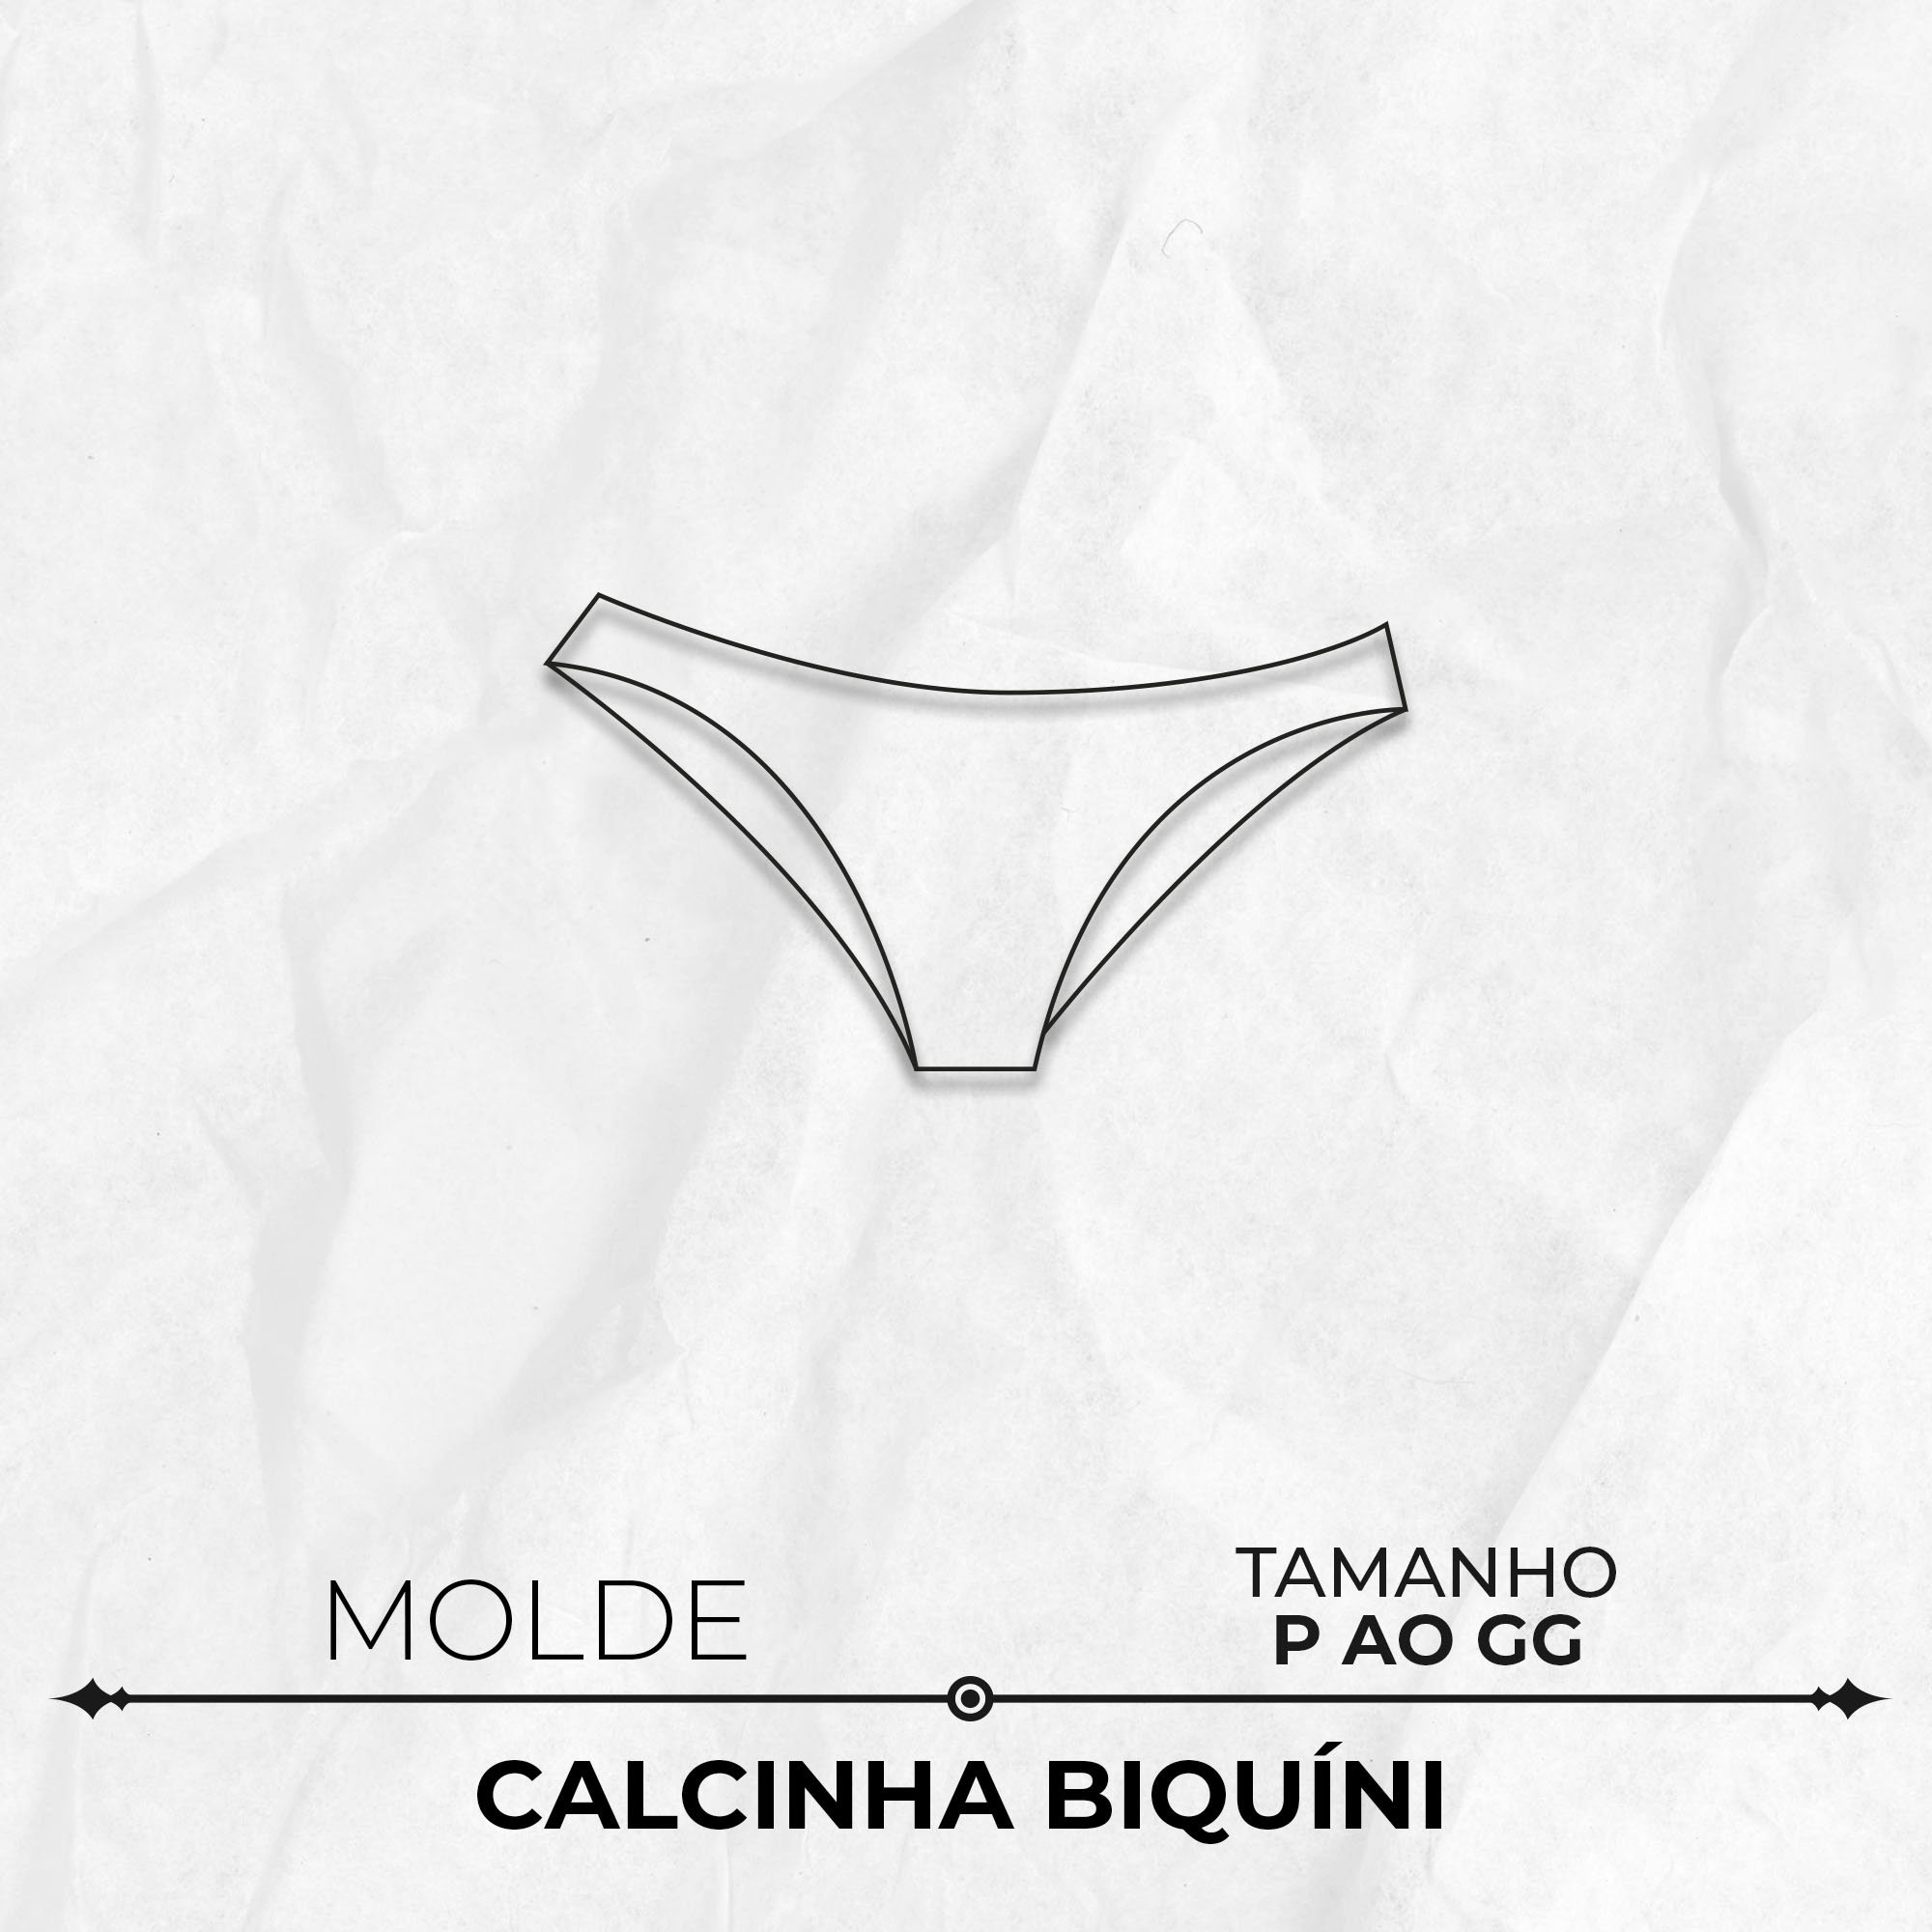 Molde lingerie calcinha biquíni by Marlene Mukai